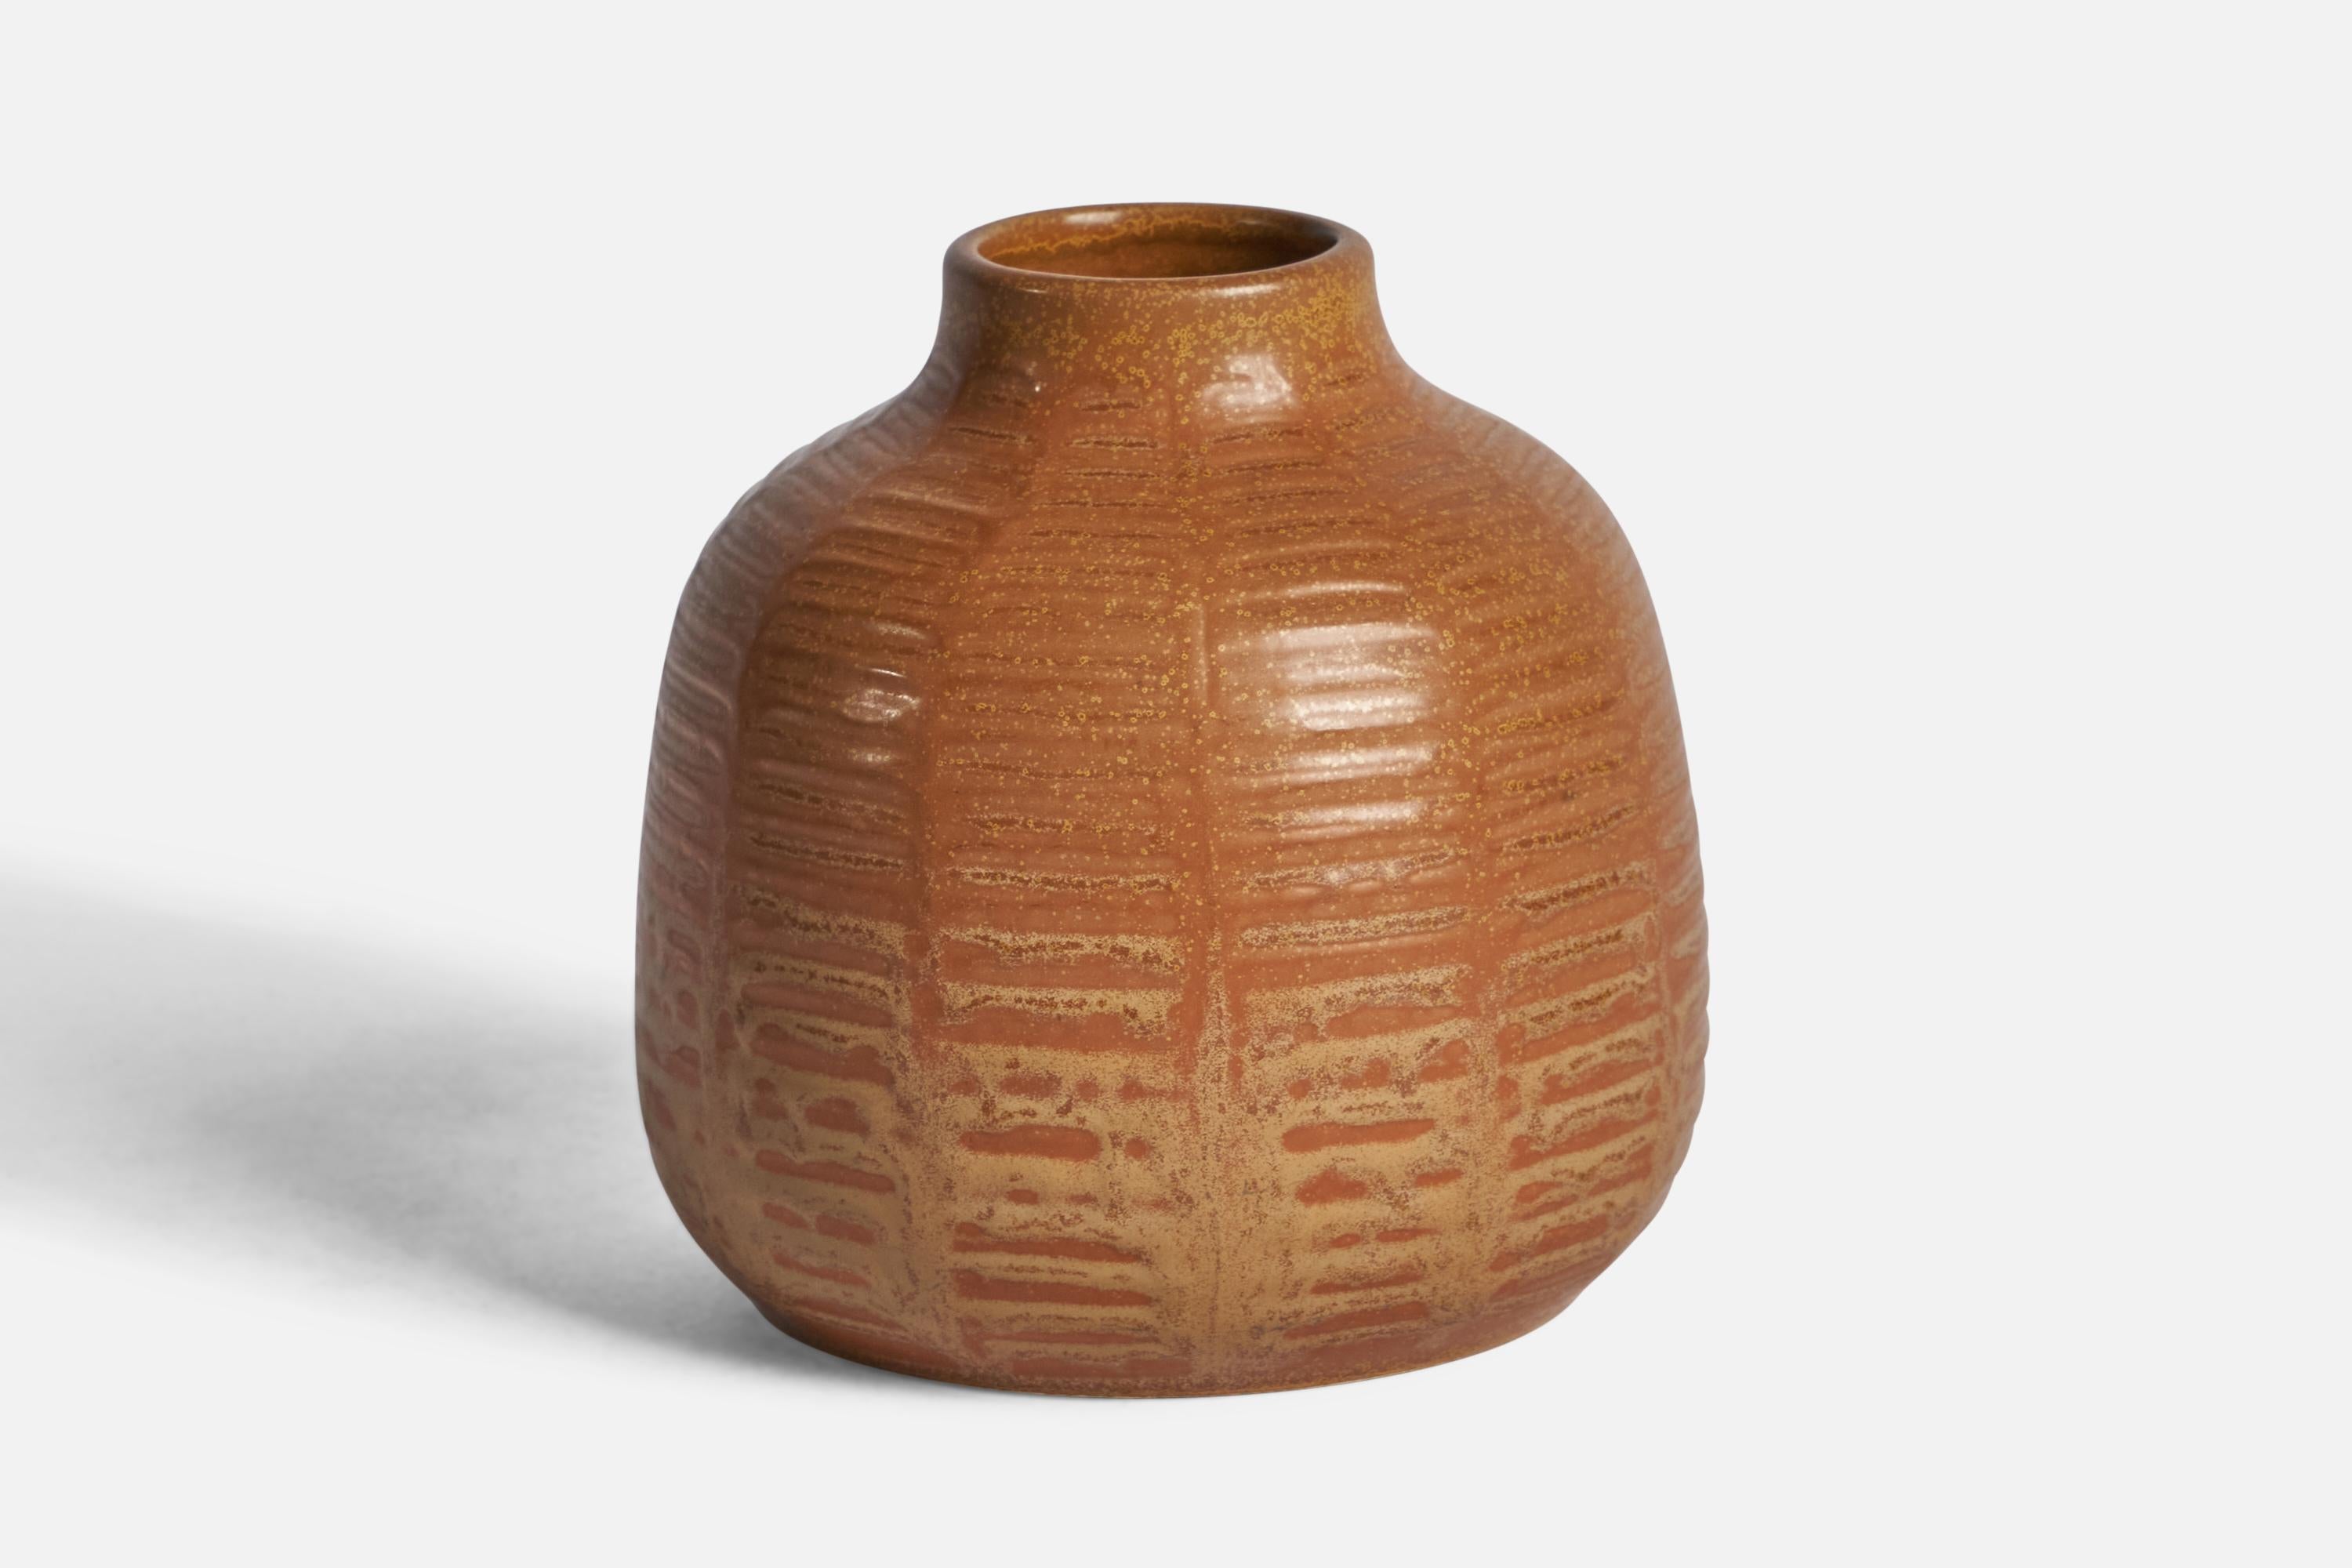 A brown-glazed and incised stoneware vase designed and produced by Figgjo Fajanse, Norway, 1974.

“FIGGJO FAJANSE — STAVANGERFLINT AS JULEN 1974” on bottom